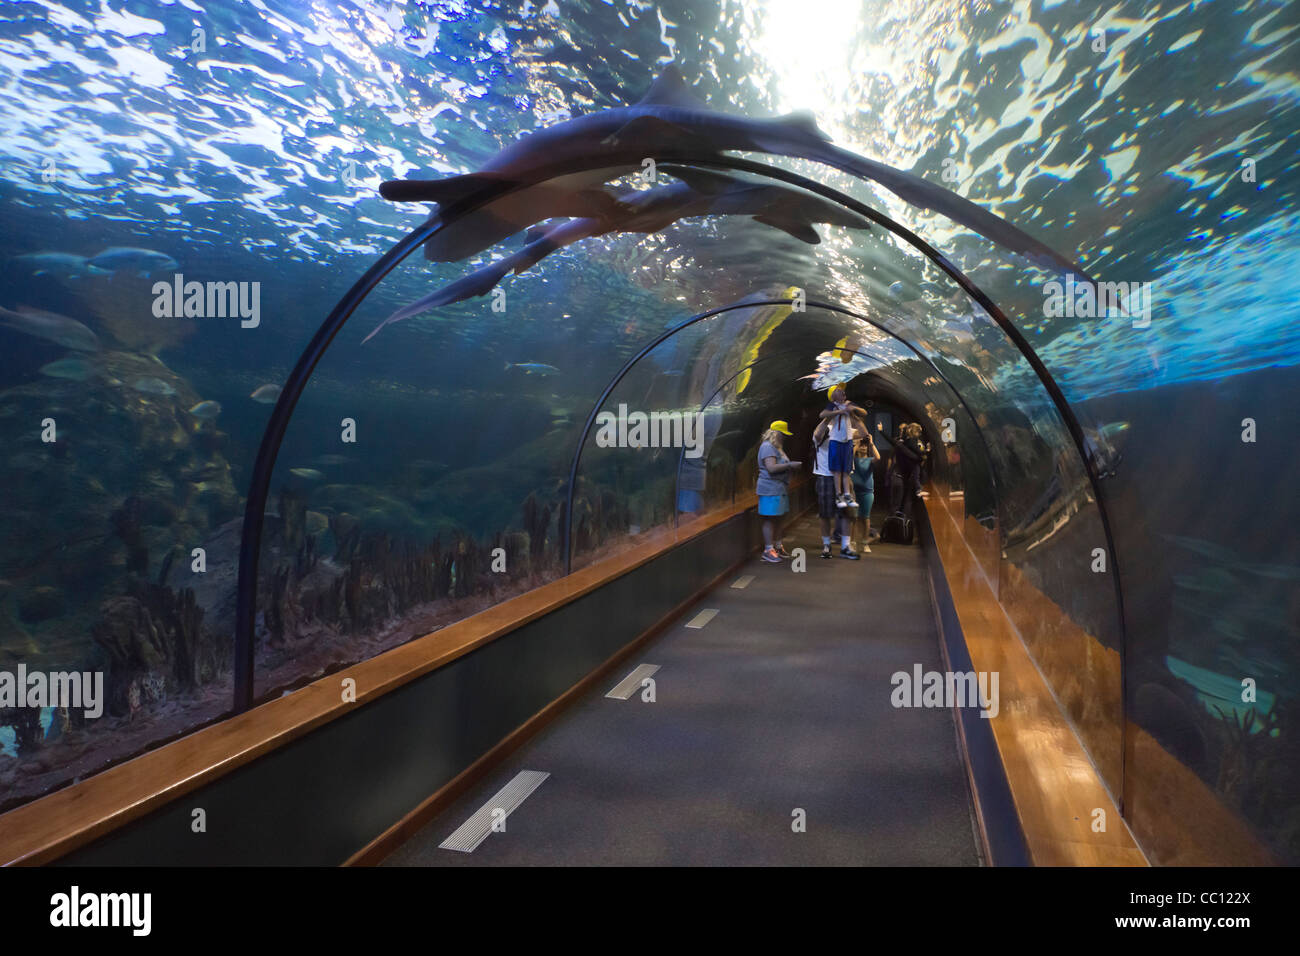 Loro Parque, Tenerife's prime wildlife-zoo attraction. Aquarium tunnel with shark above camera, visitors. Stock Photo